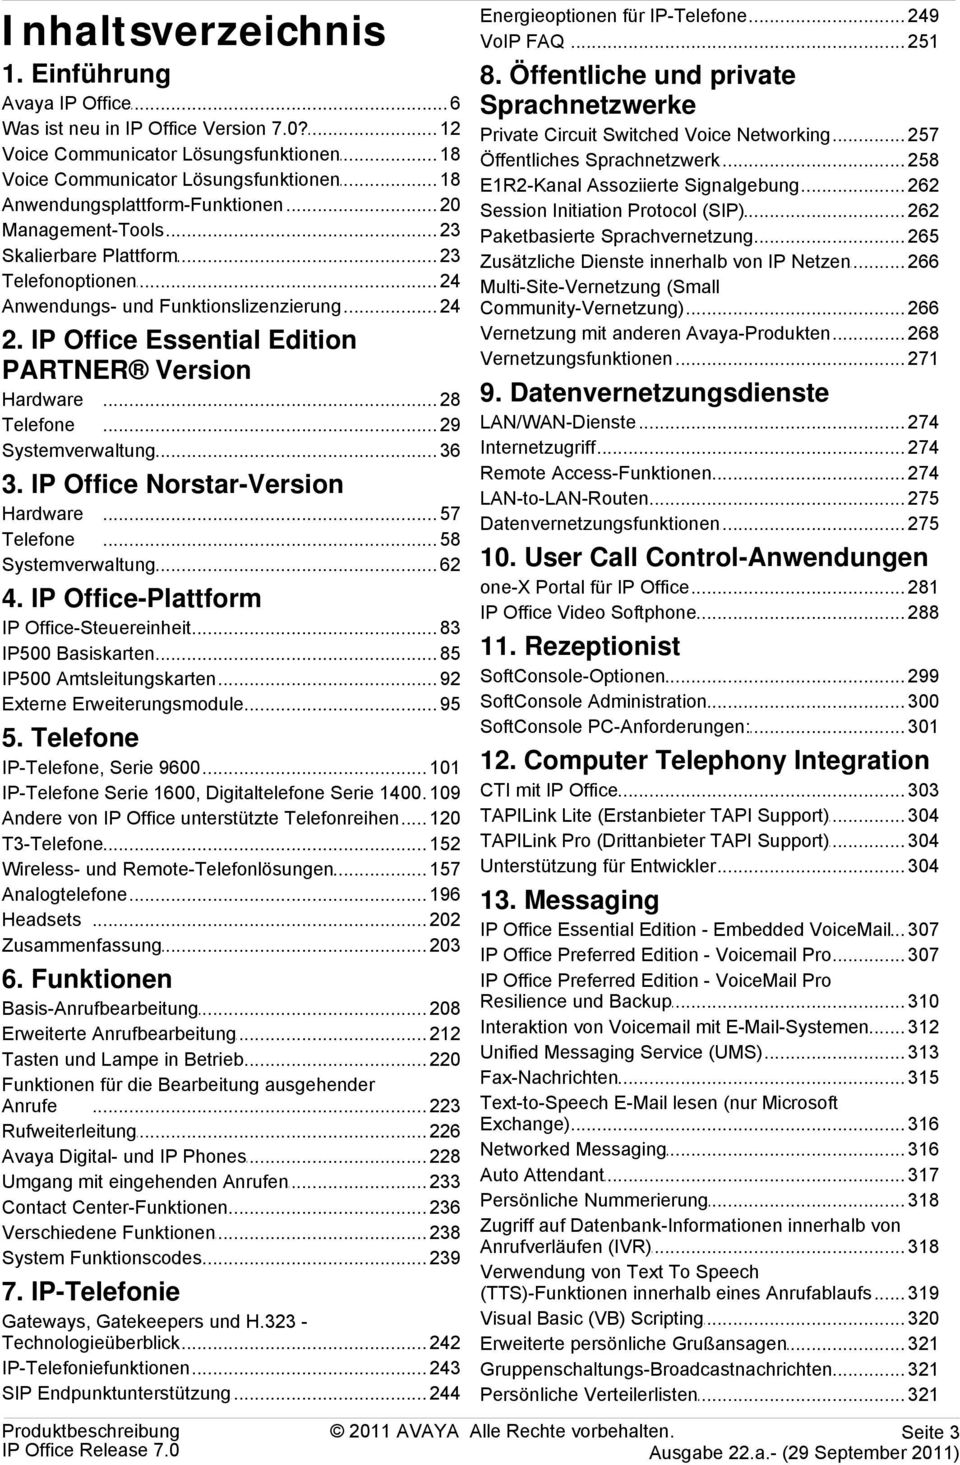 IP Office Essential Edition PARTNER Version Hardware... 28 Telefone... 29 Systemverwaltung... 36 3. IP Office Norstar-Version Hardware... 57 Telefone... 58 Systemverwaltung... 62 4.